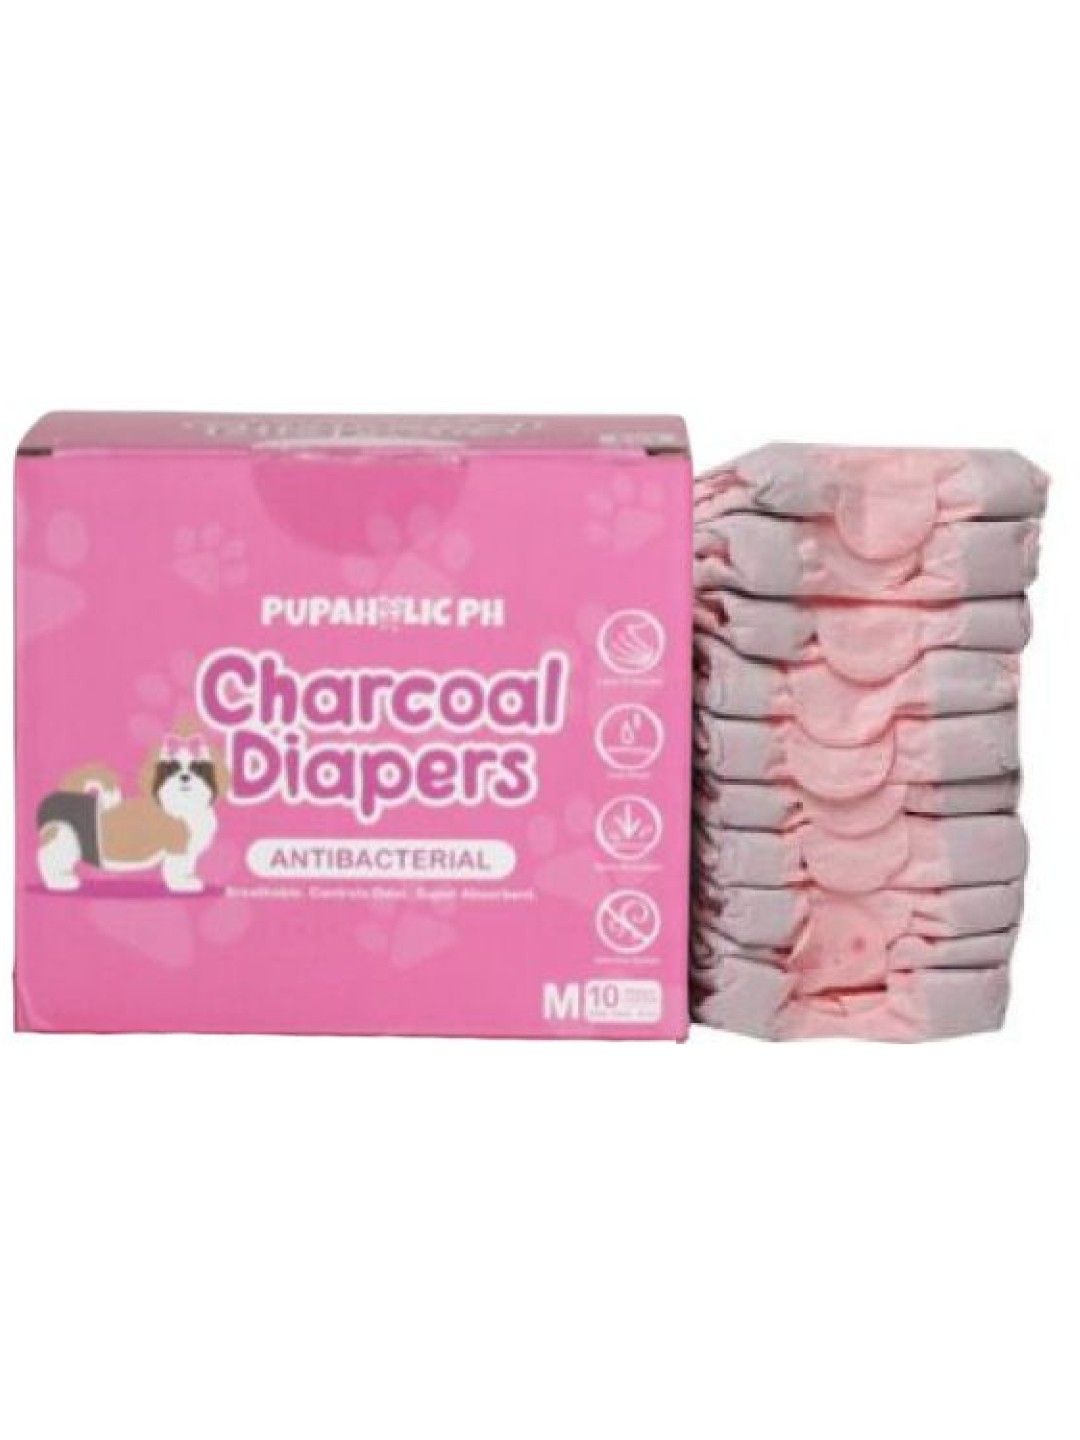 Pupaholic PH 1 Box of Charcoal Diaper 10Pcs/Box (Female) - Medium